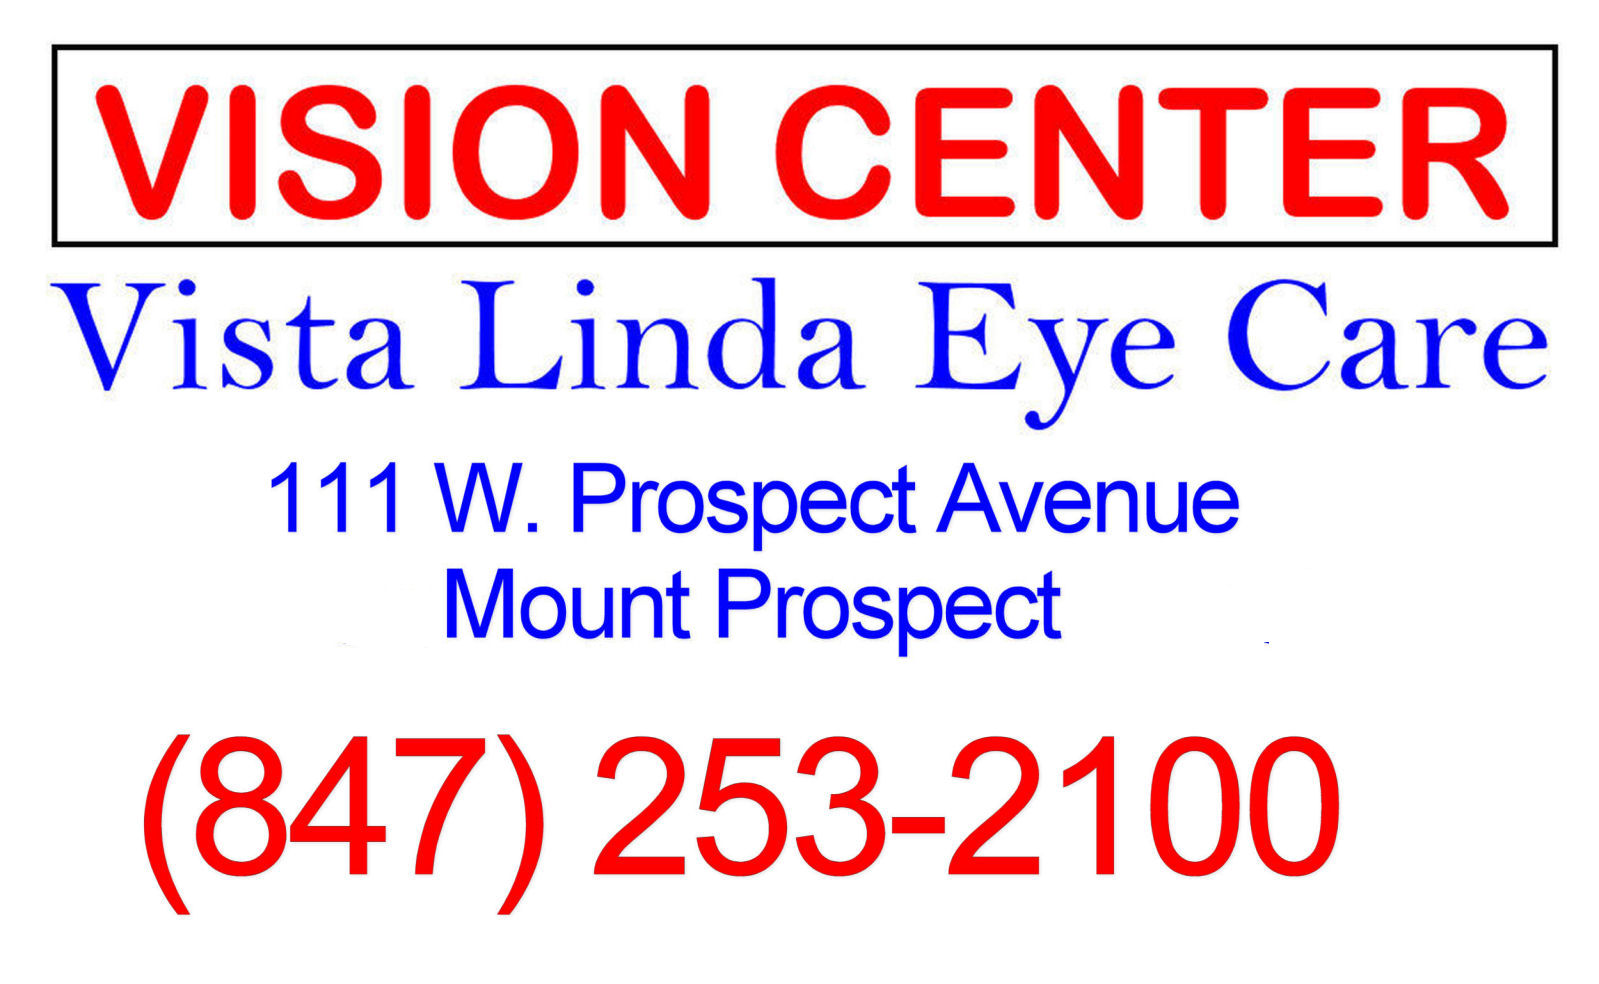 Vista Linda Eye Care